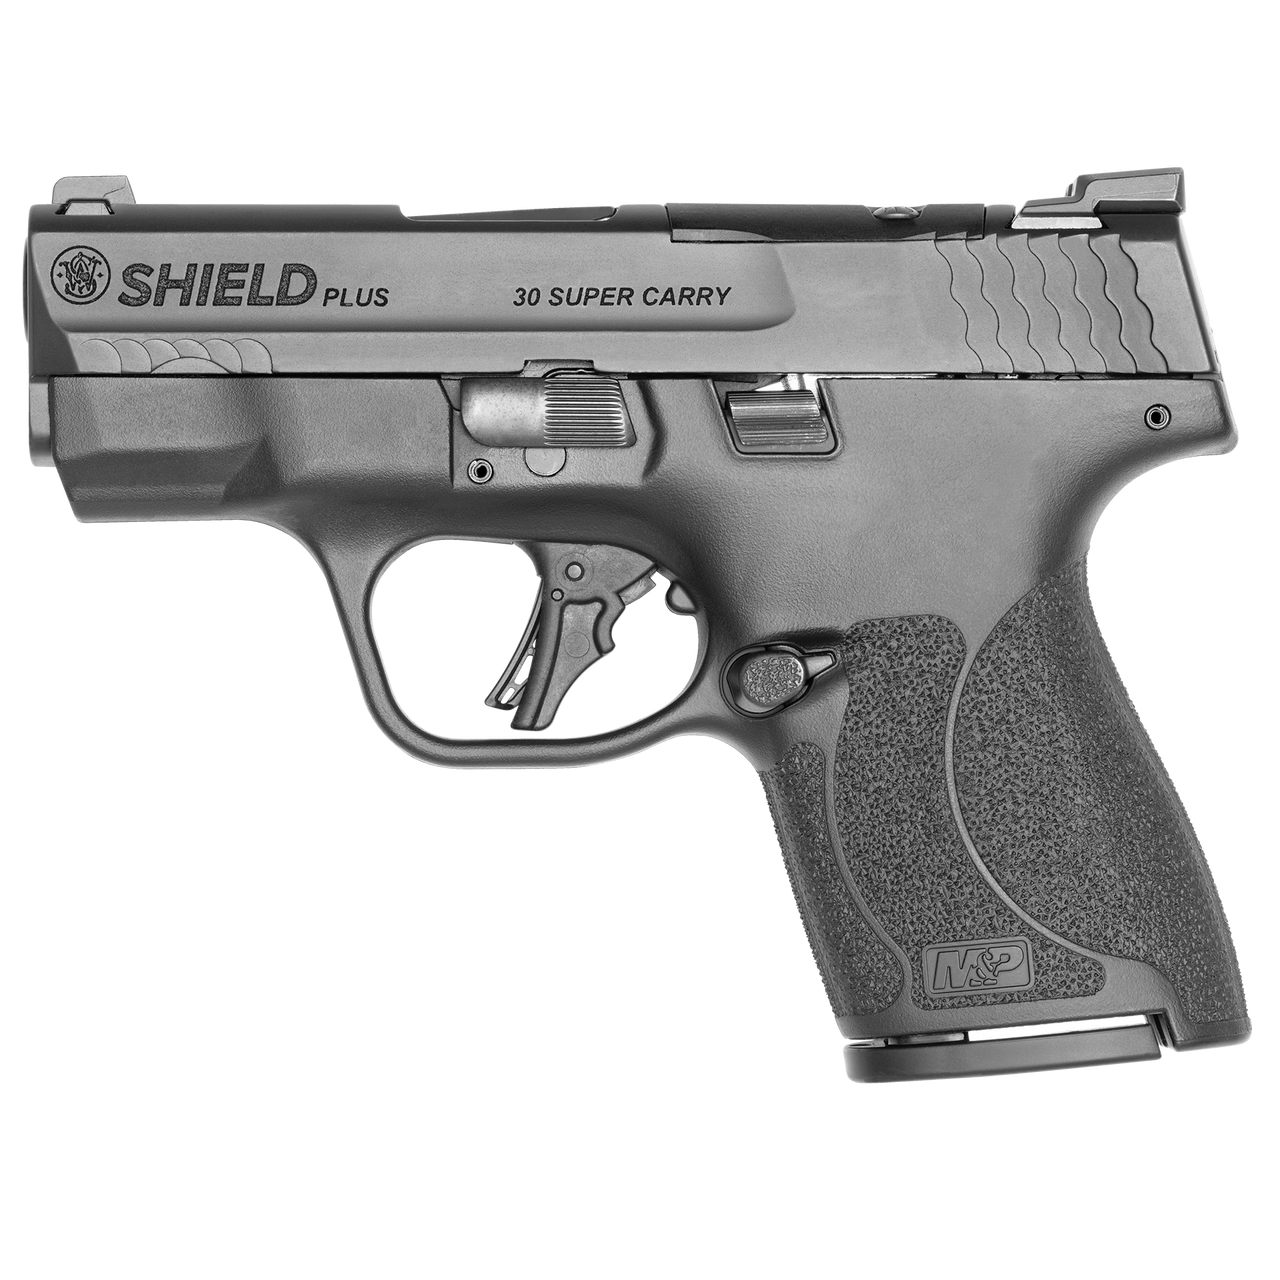 Buy S&W Shield Plus OR 30 Super Carry Pistol Online